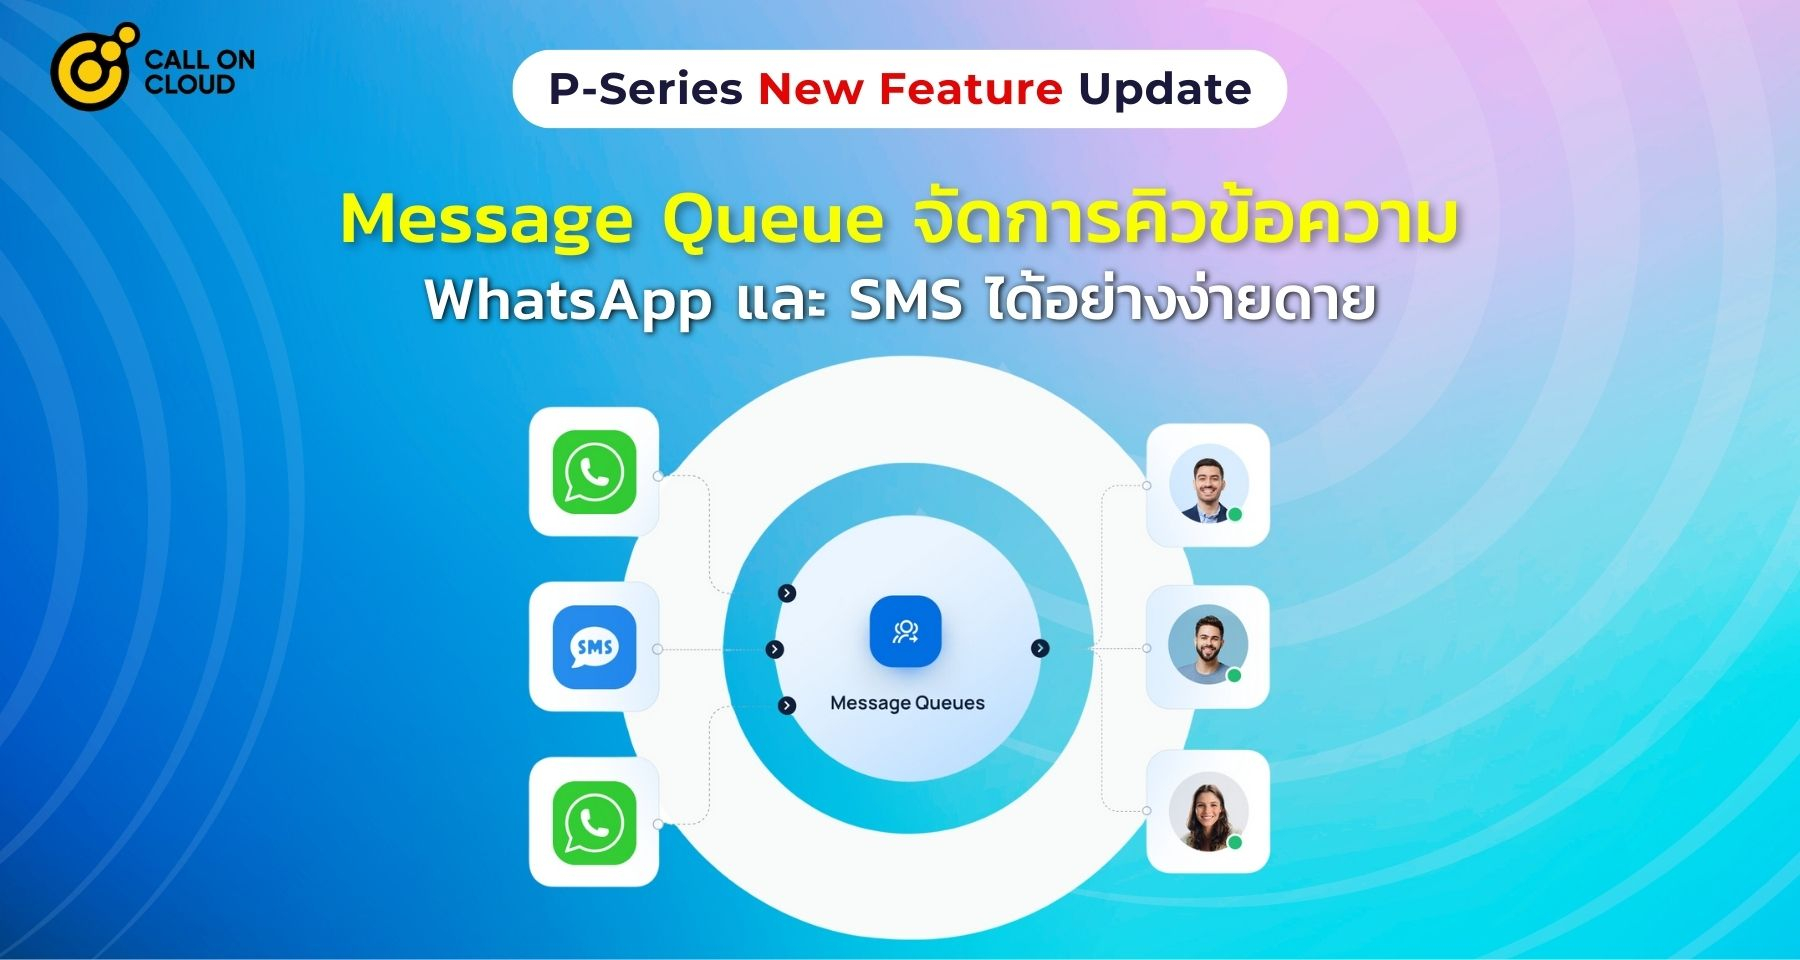 P-Series New Feature Update: Message Queue จัดการคิวข้อความ WhatsApp และ SMS ได้อย่างง่ายดาย